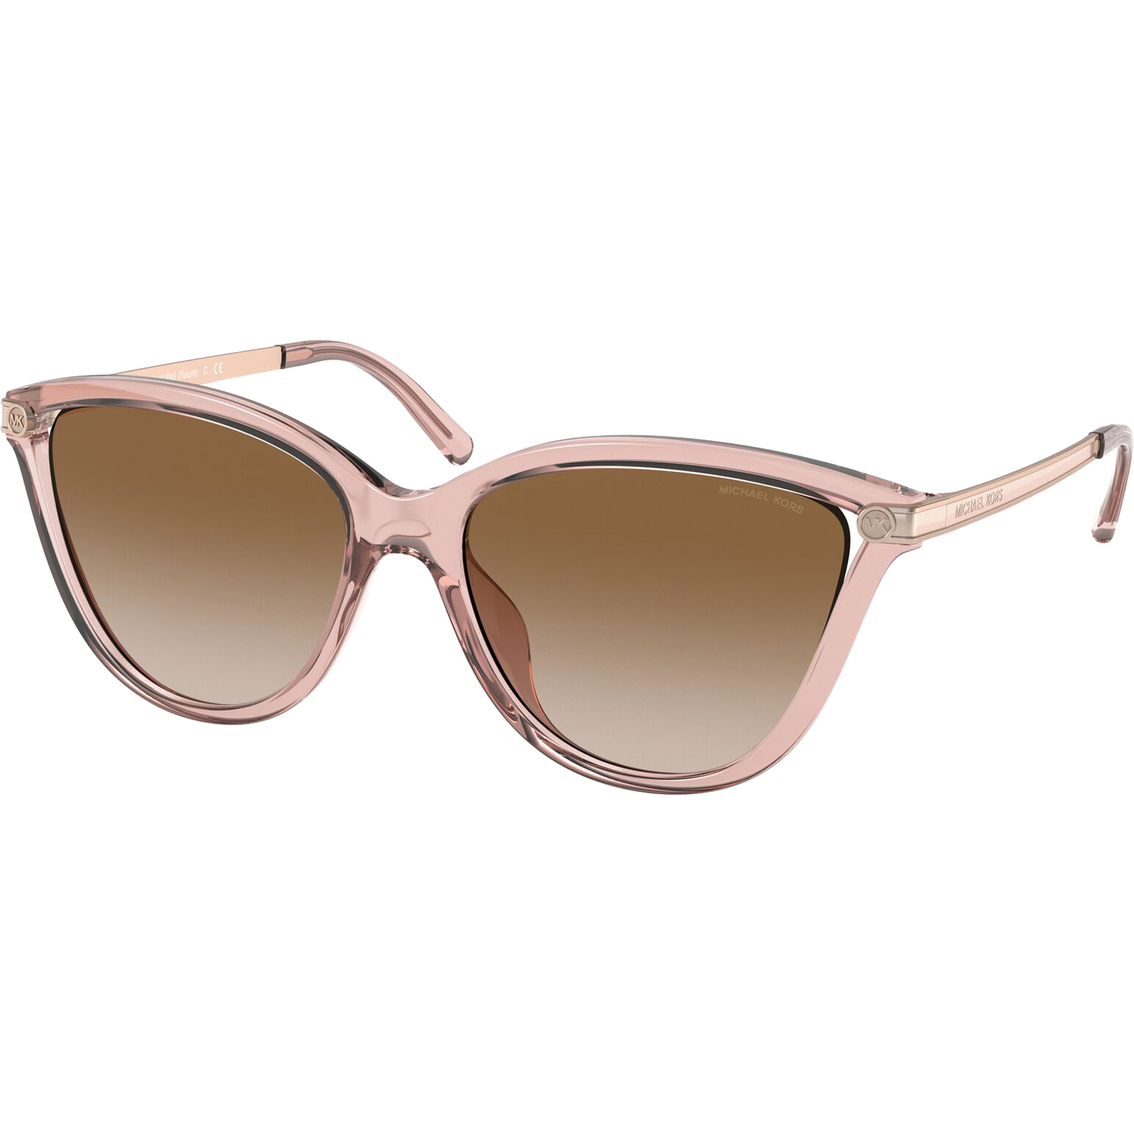 Michael Kors Tulum Sunglasses 0mk2139u | Women's Sunglasses | Clothing ...